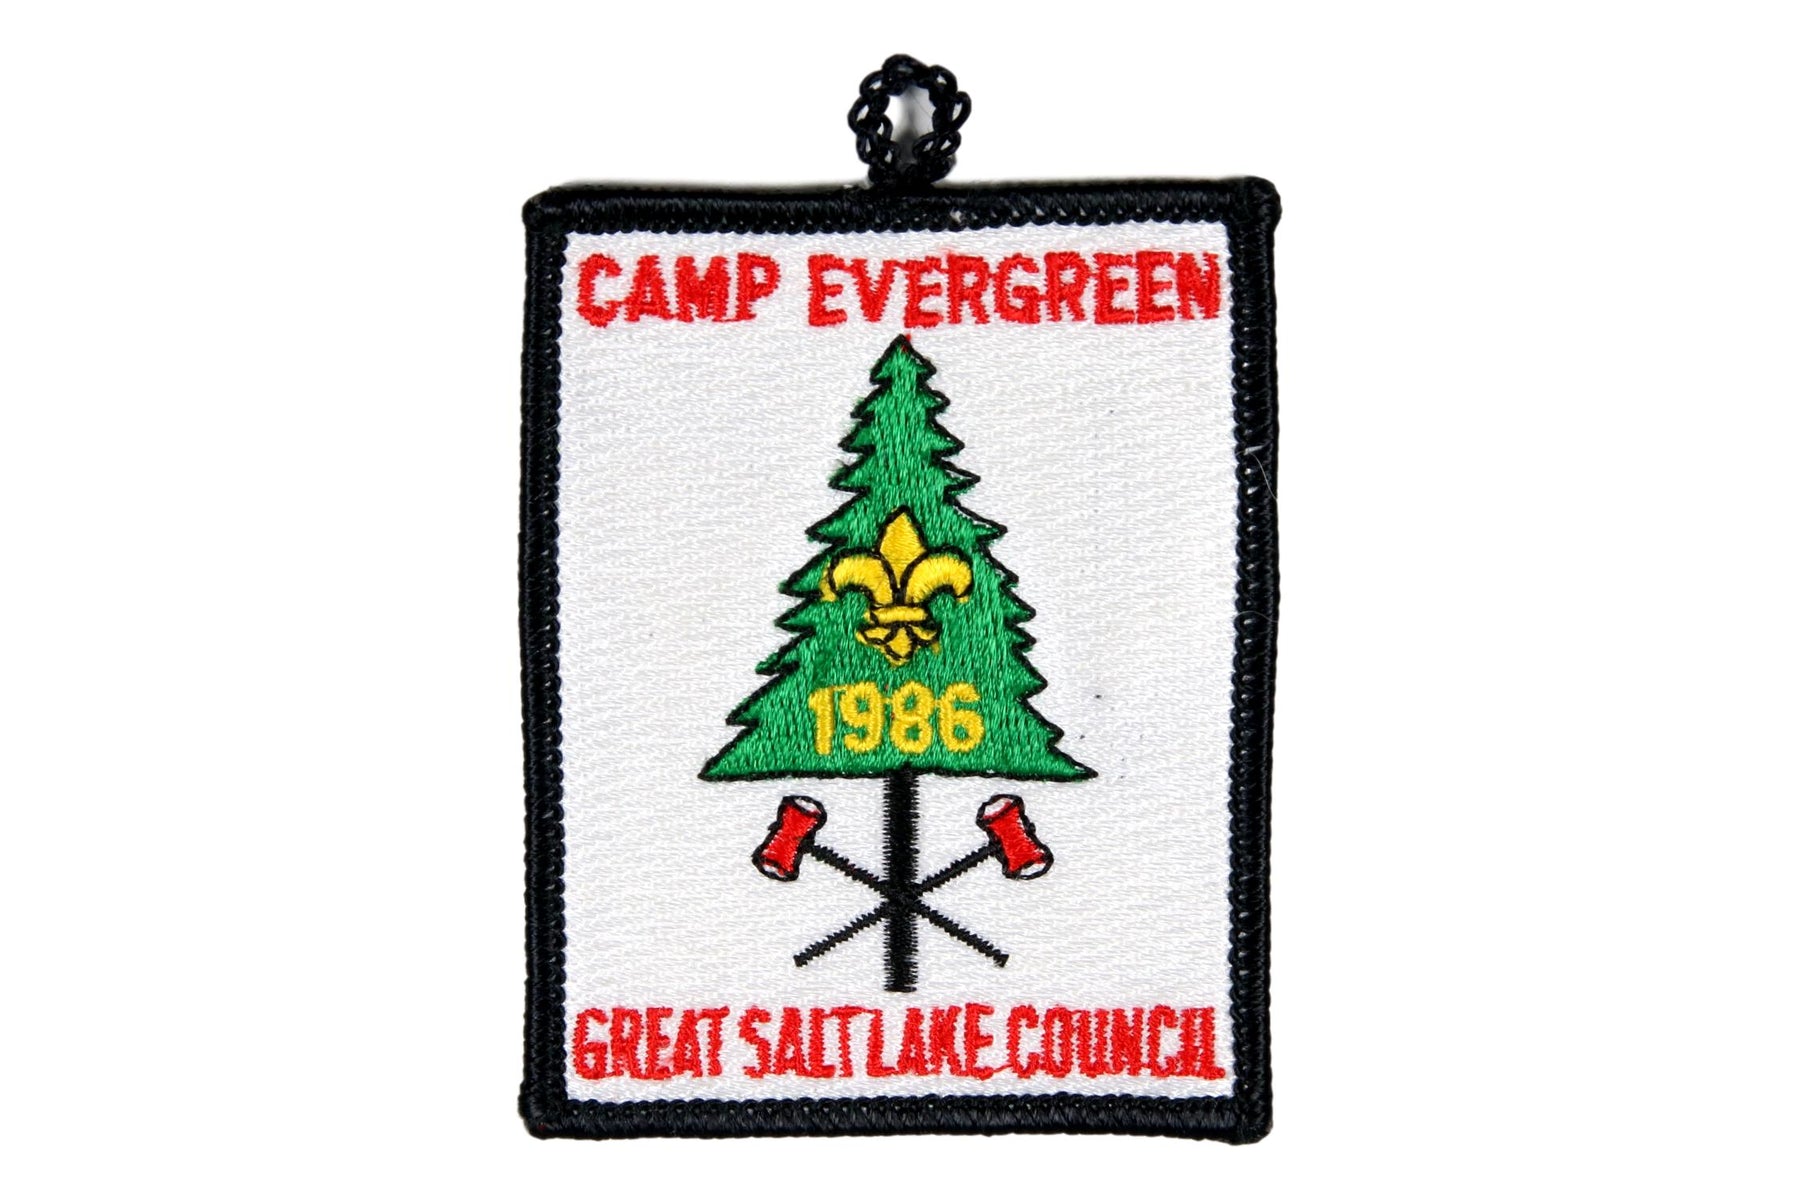 Evergreen Camp Patch 1986